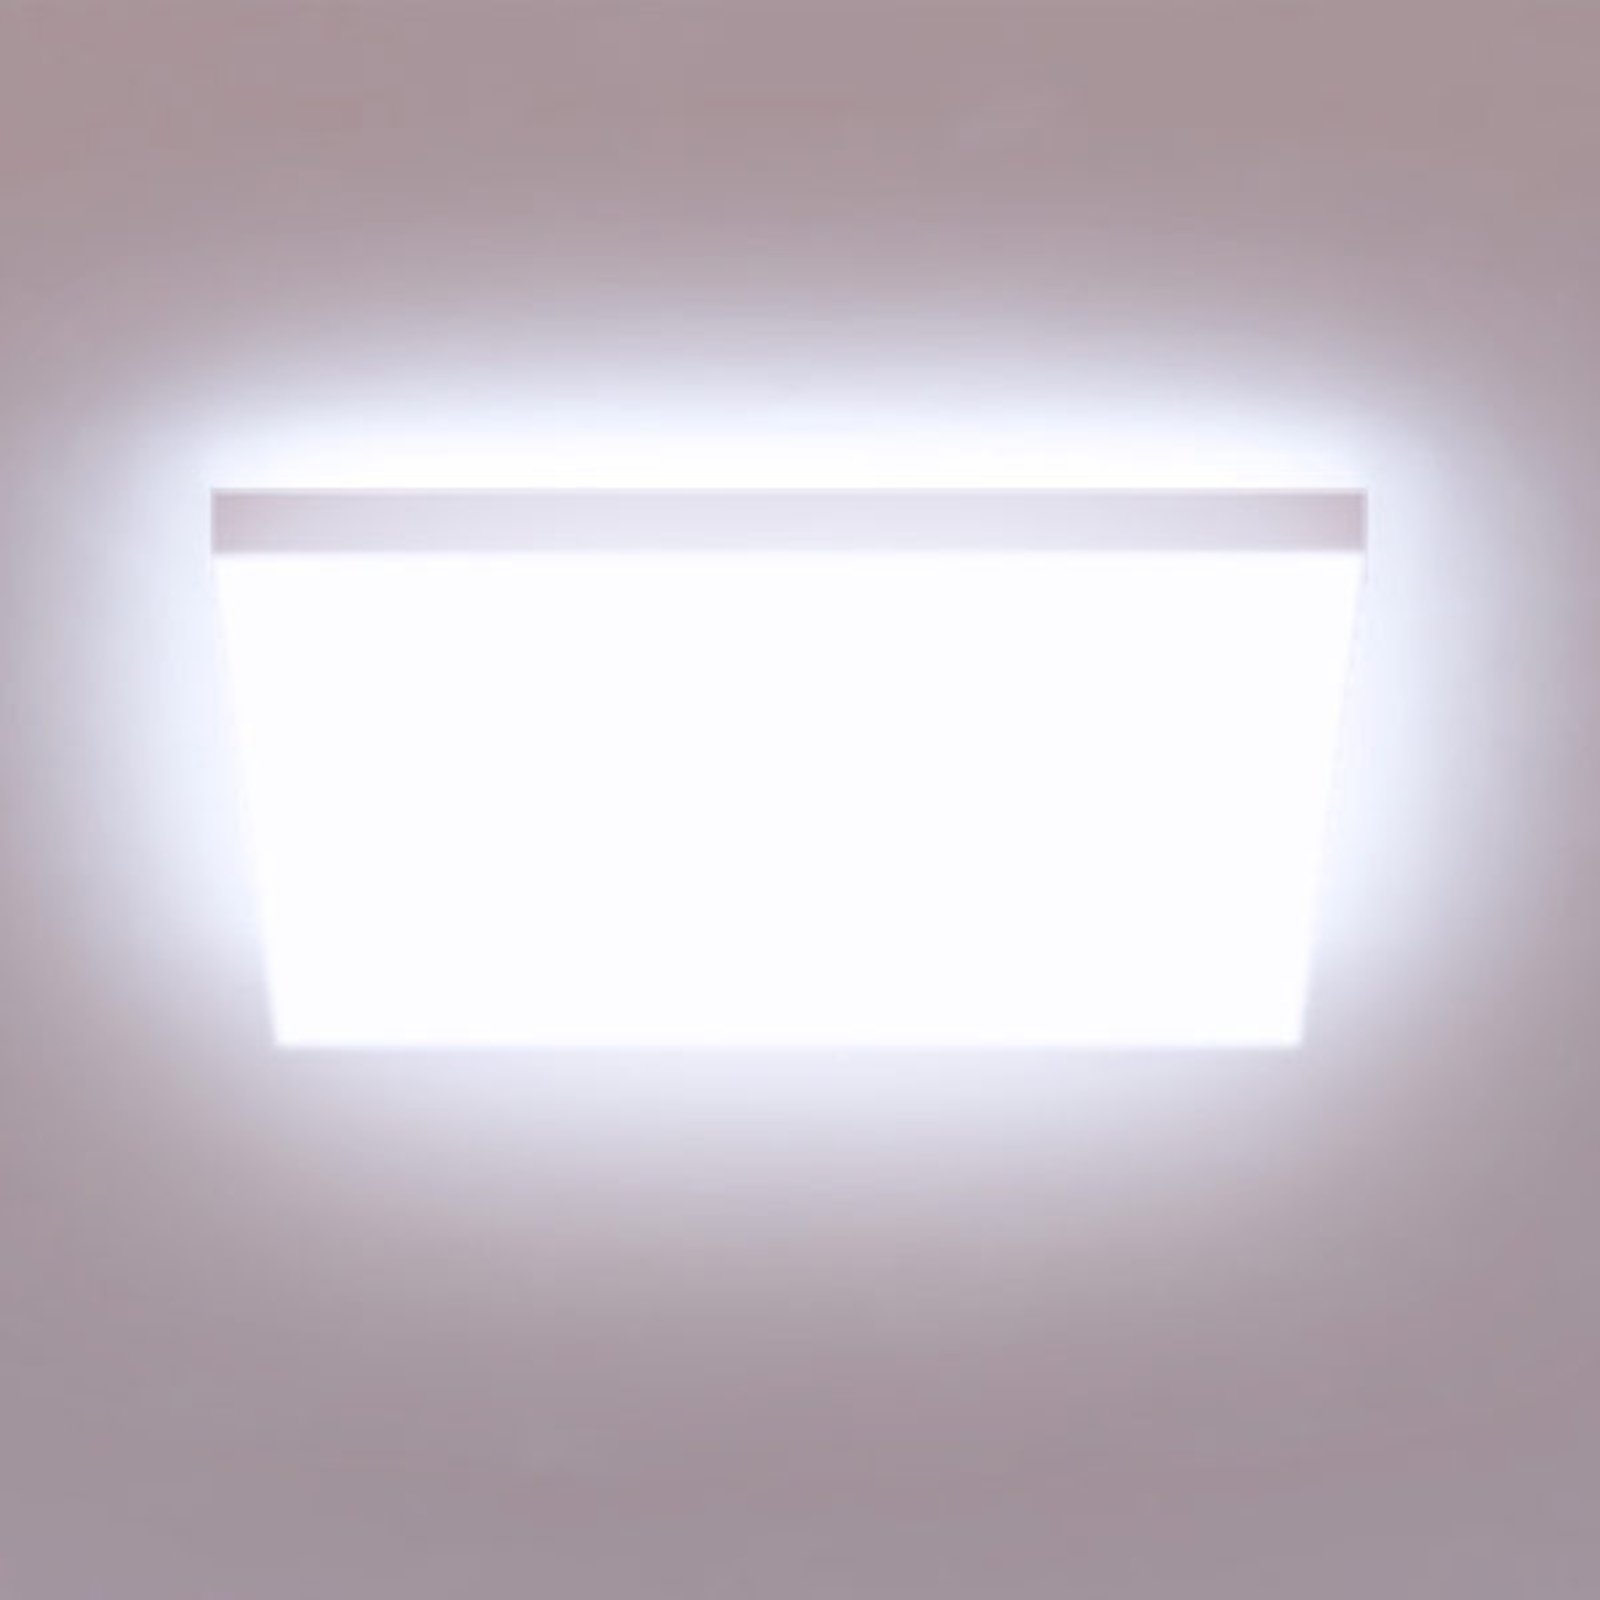 Müller Licht tint LED panel Loris, 45 x 45 cm